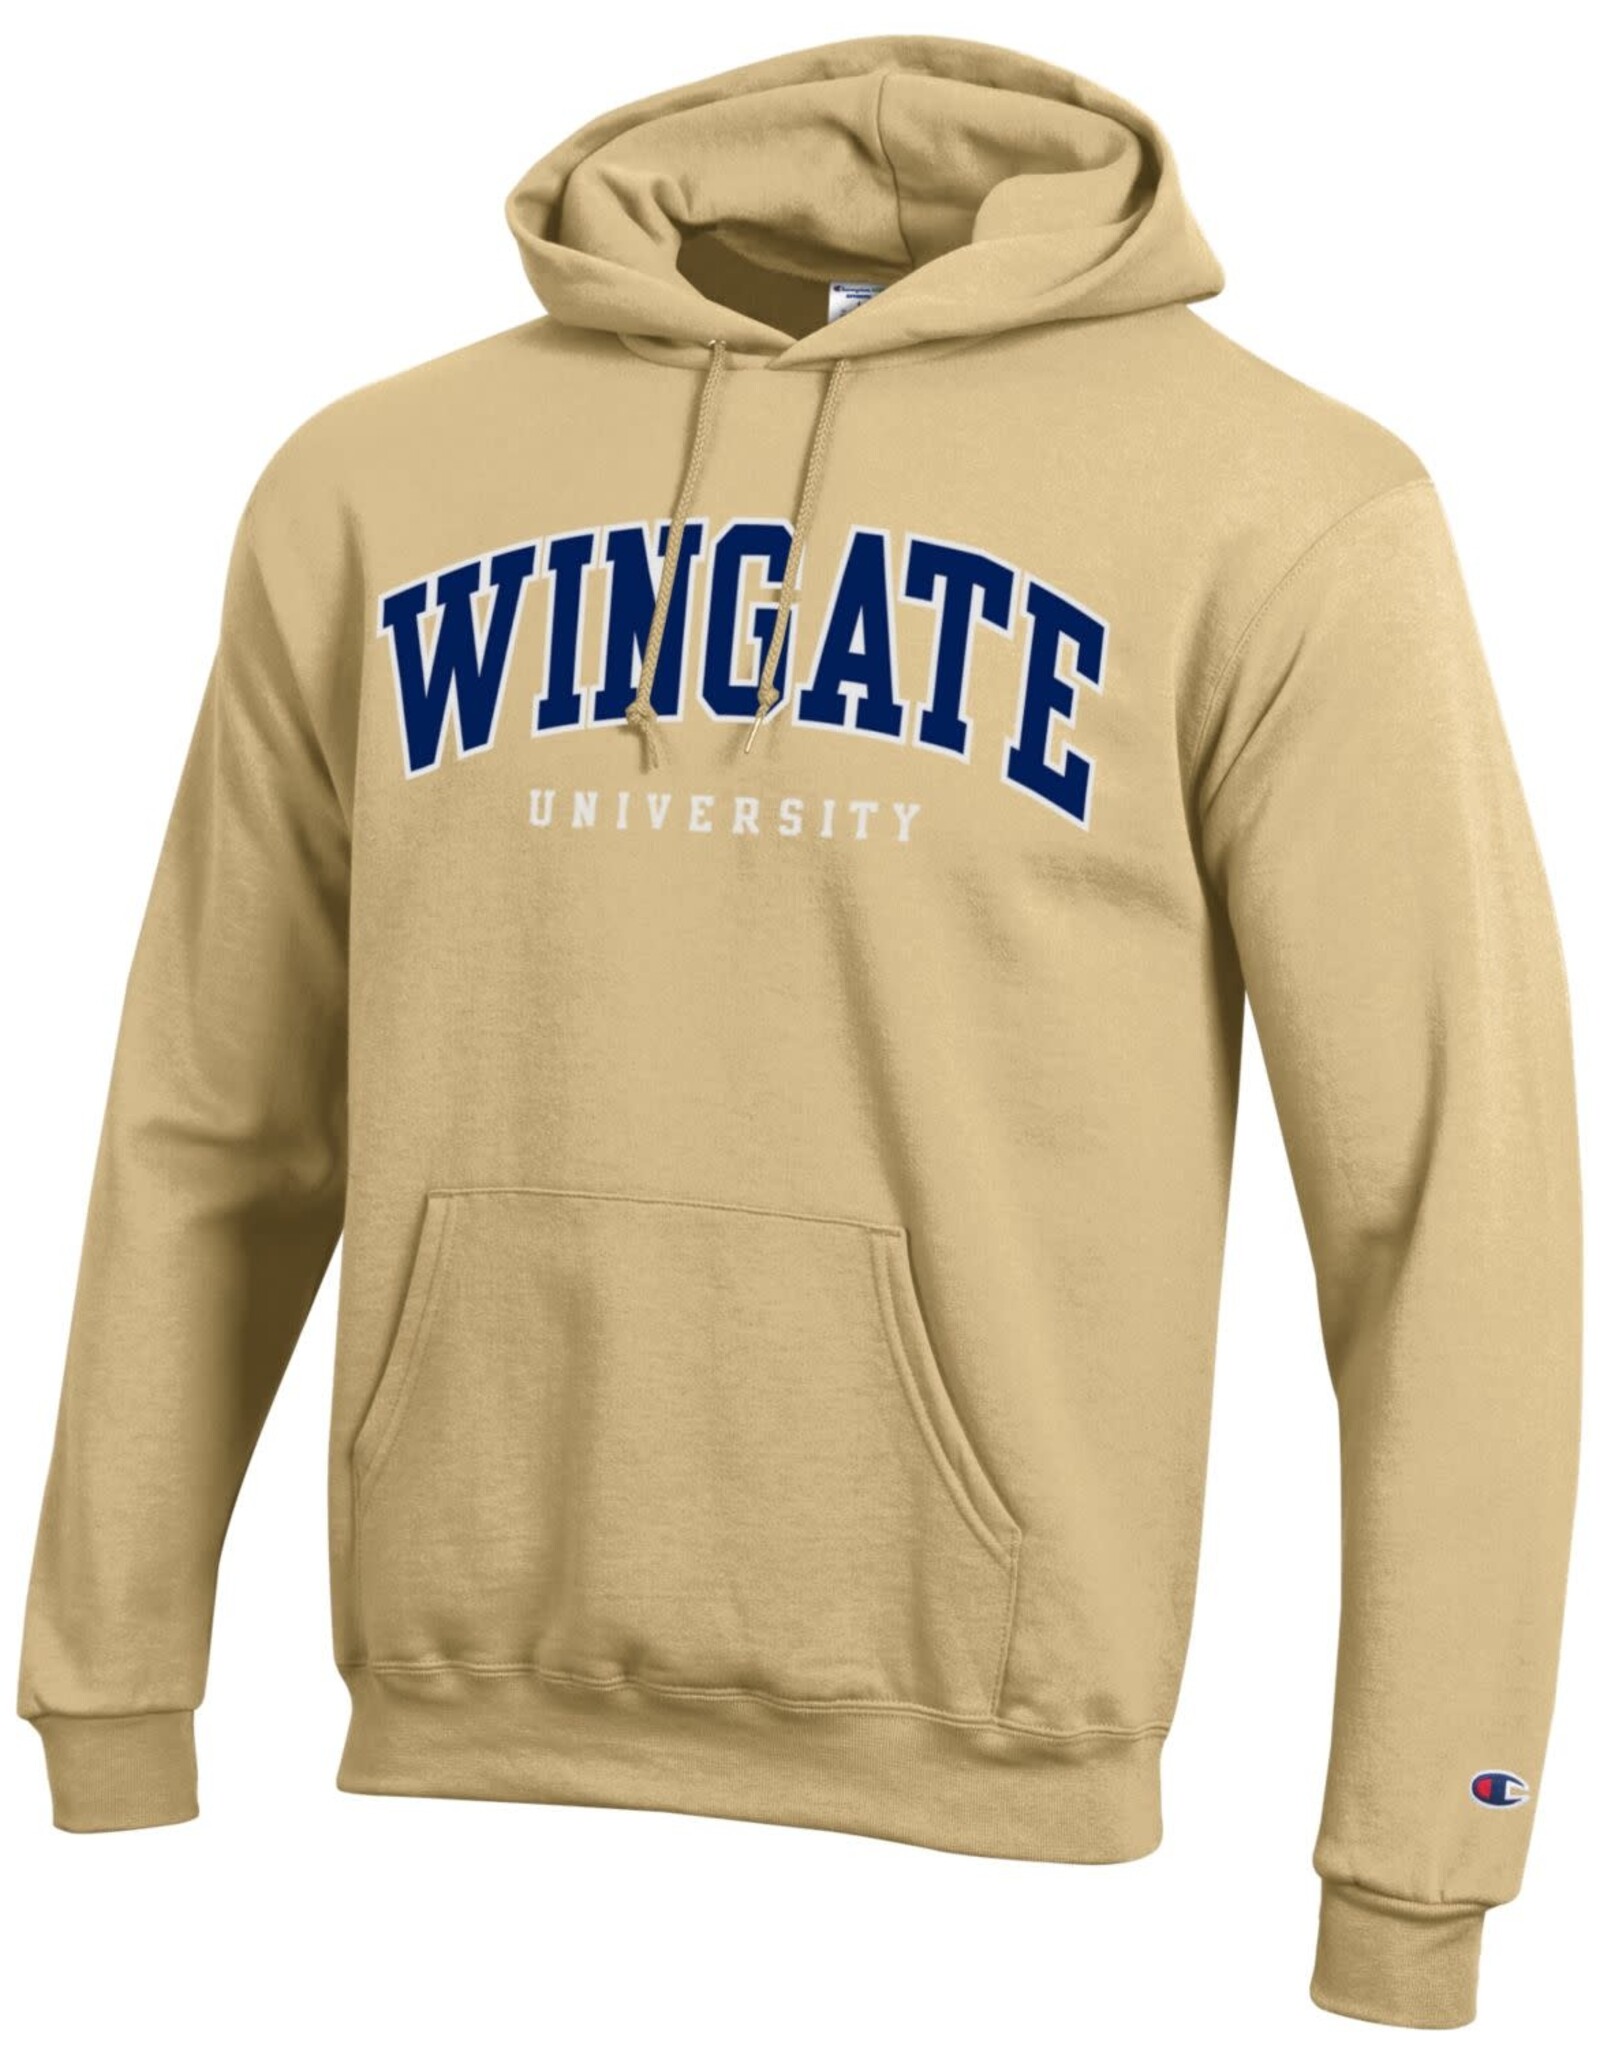 Champion Vegas Gold Powerblend Fleece Wingate University Hoodie Sweatshirt